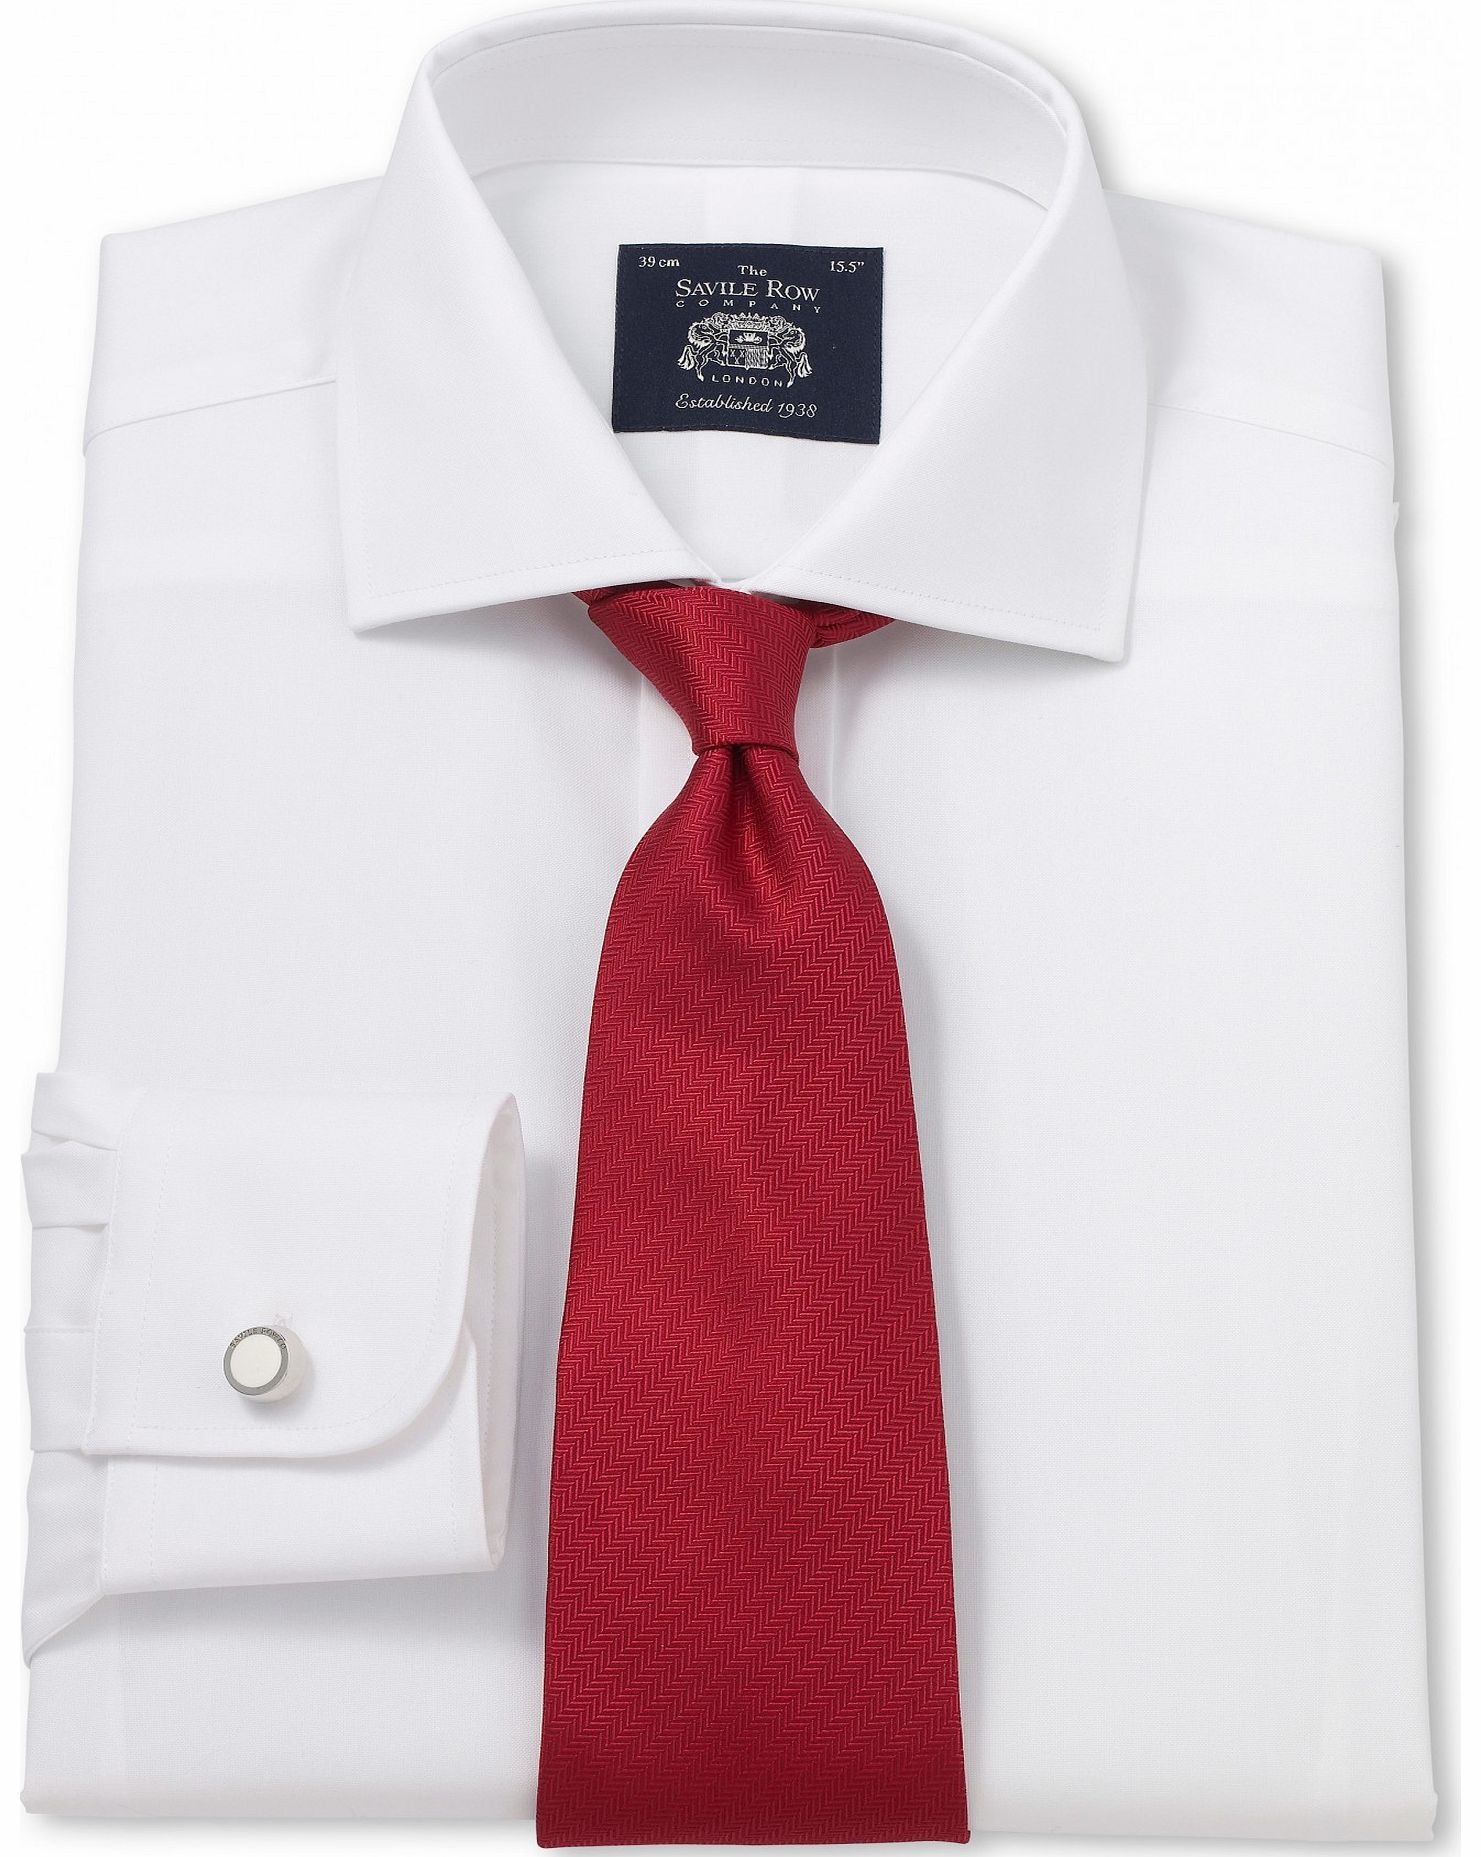 Savile Row Company White Poplin Non Iron Slim Fit Shirt 16`` Single